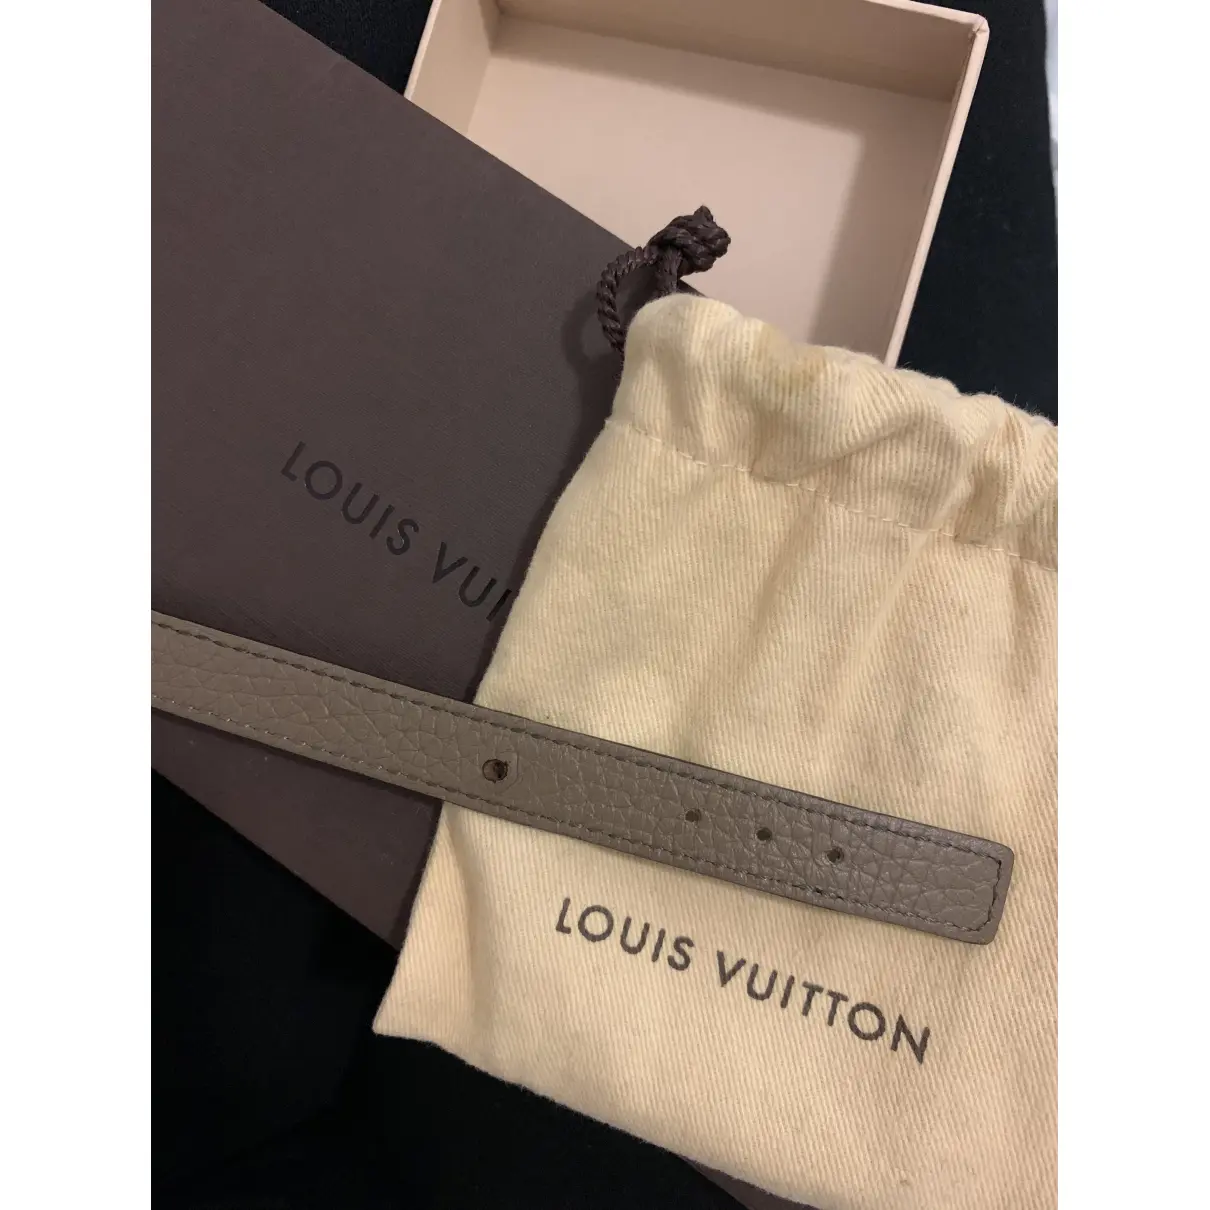 Buy Louis Vuitton Leather necklace online